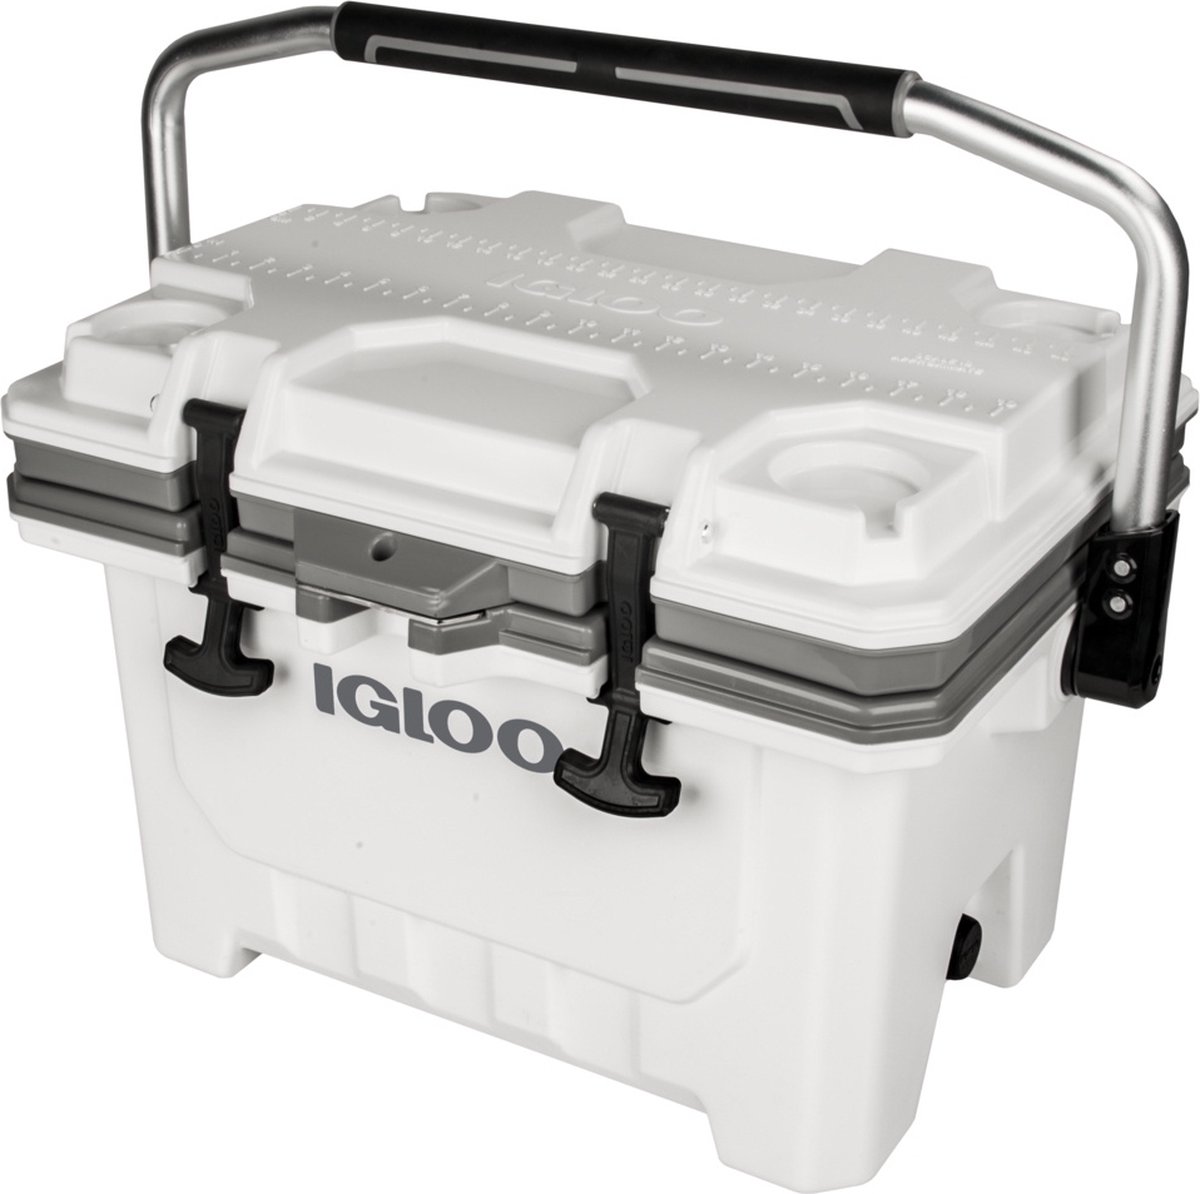 Igloo IMX 24 - De allersterkste middelgrote koelbox! - 22 Liter - Wit